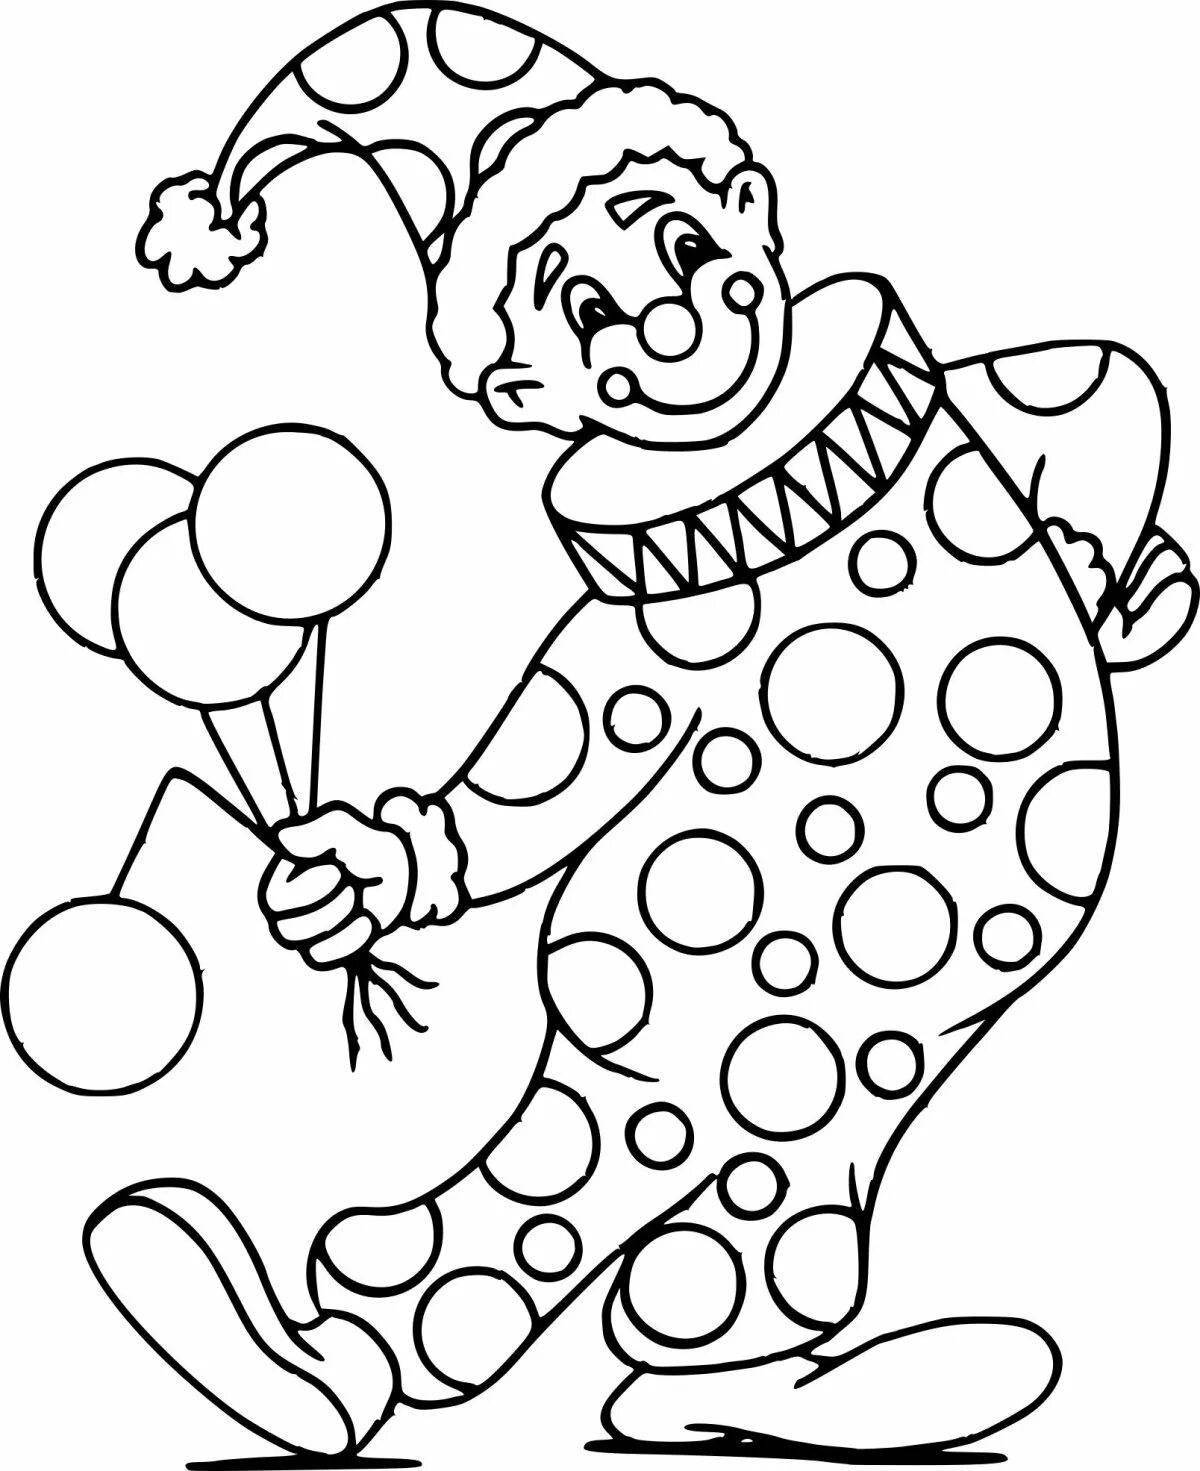 Glittering clown coloring book for preschoolers